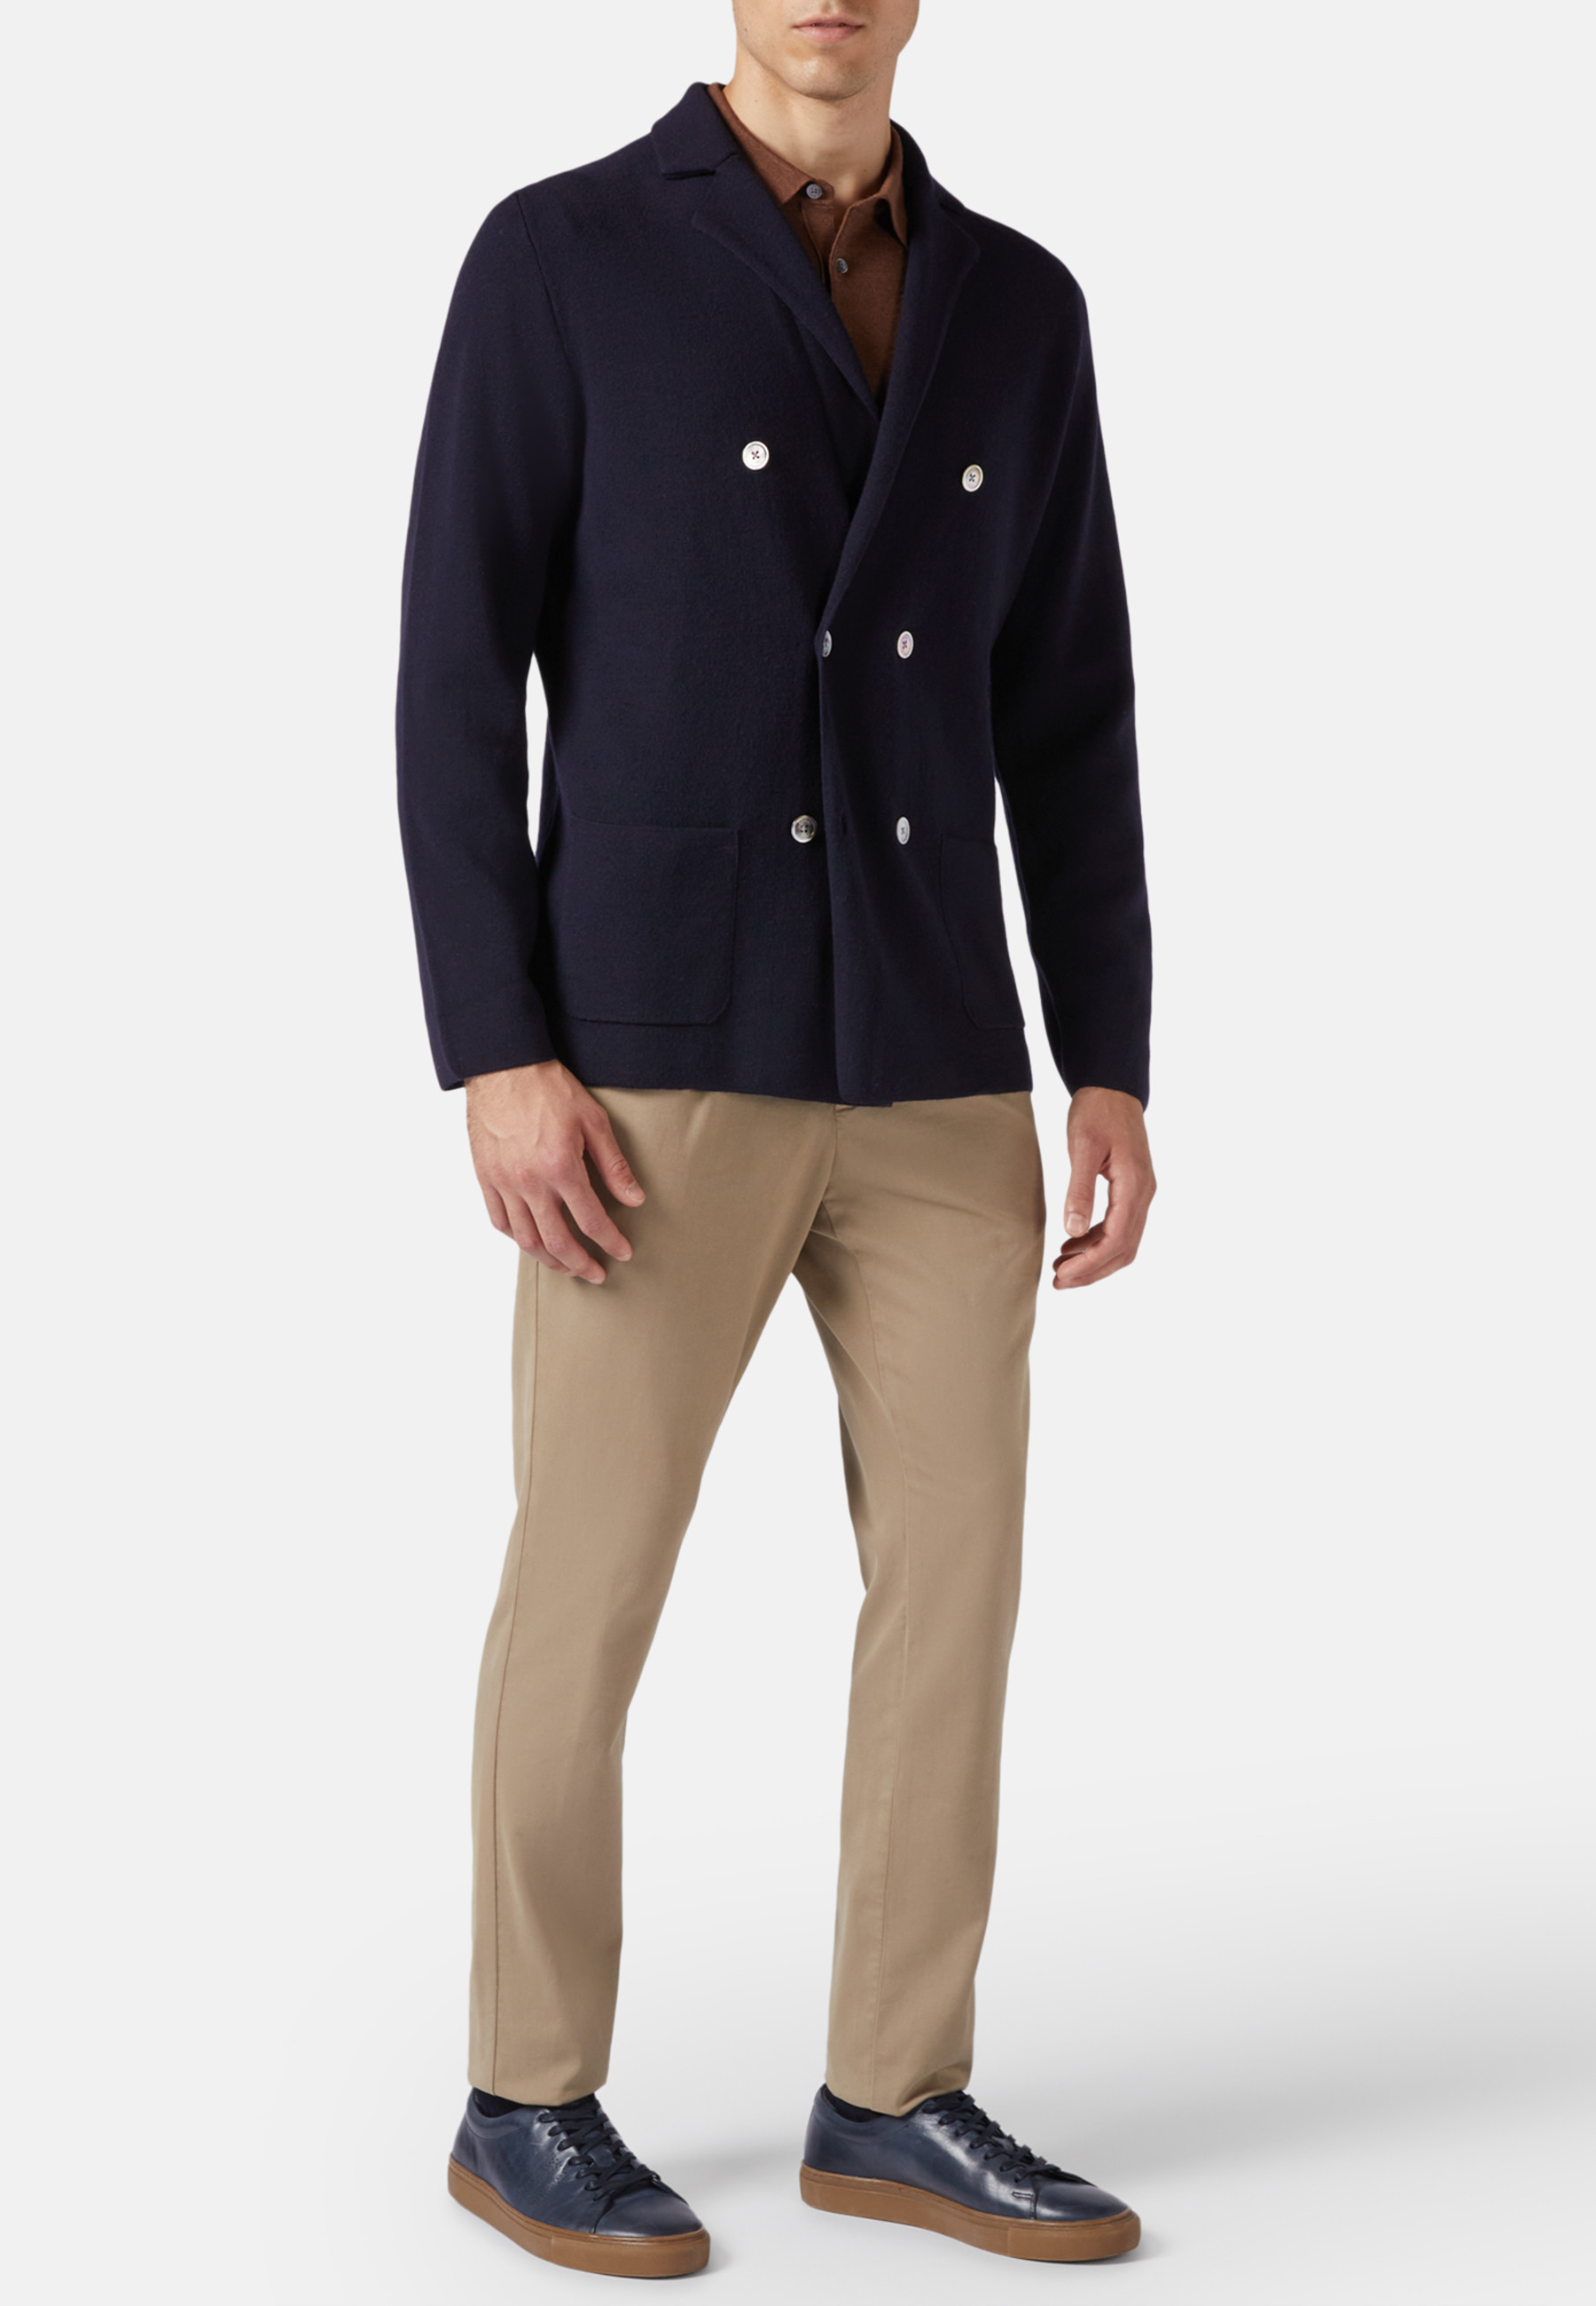 Men's Navy Merino Wool Double-Breasted Jacket